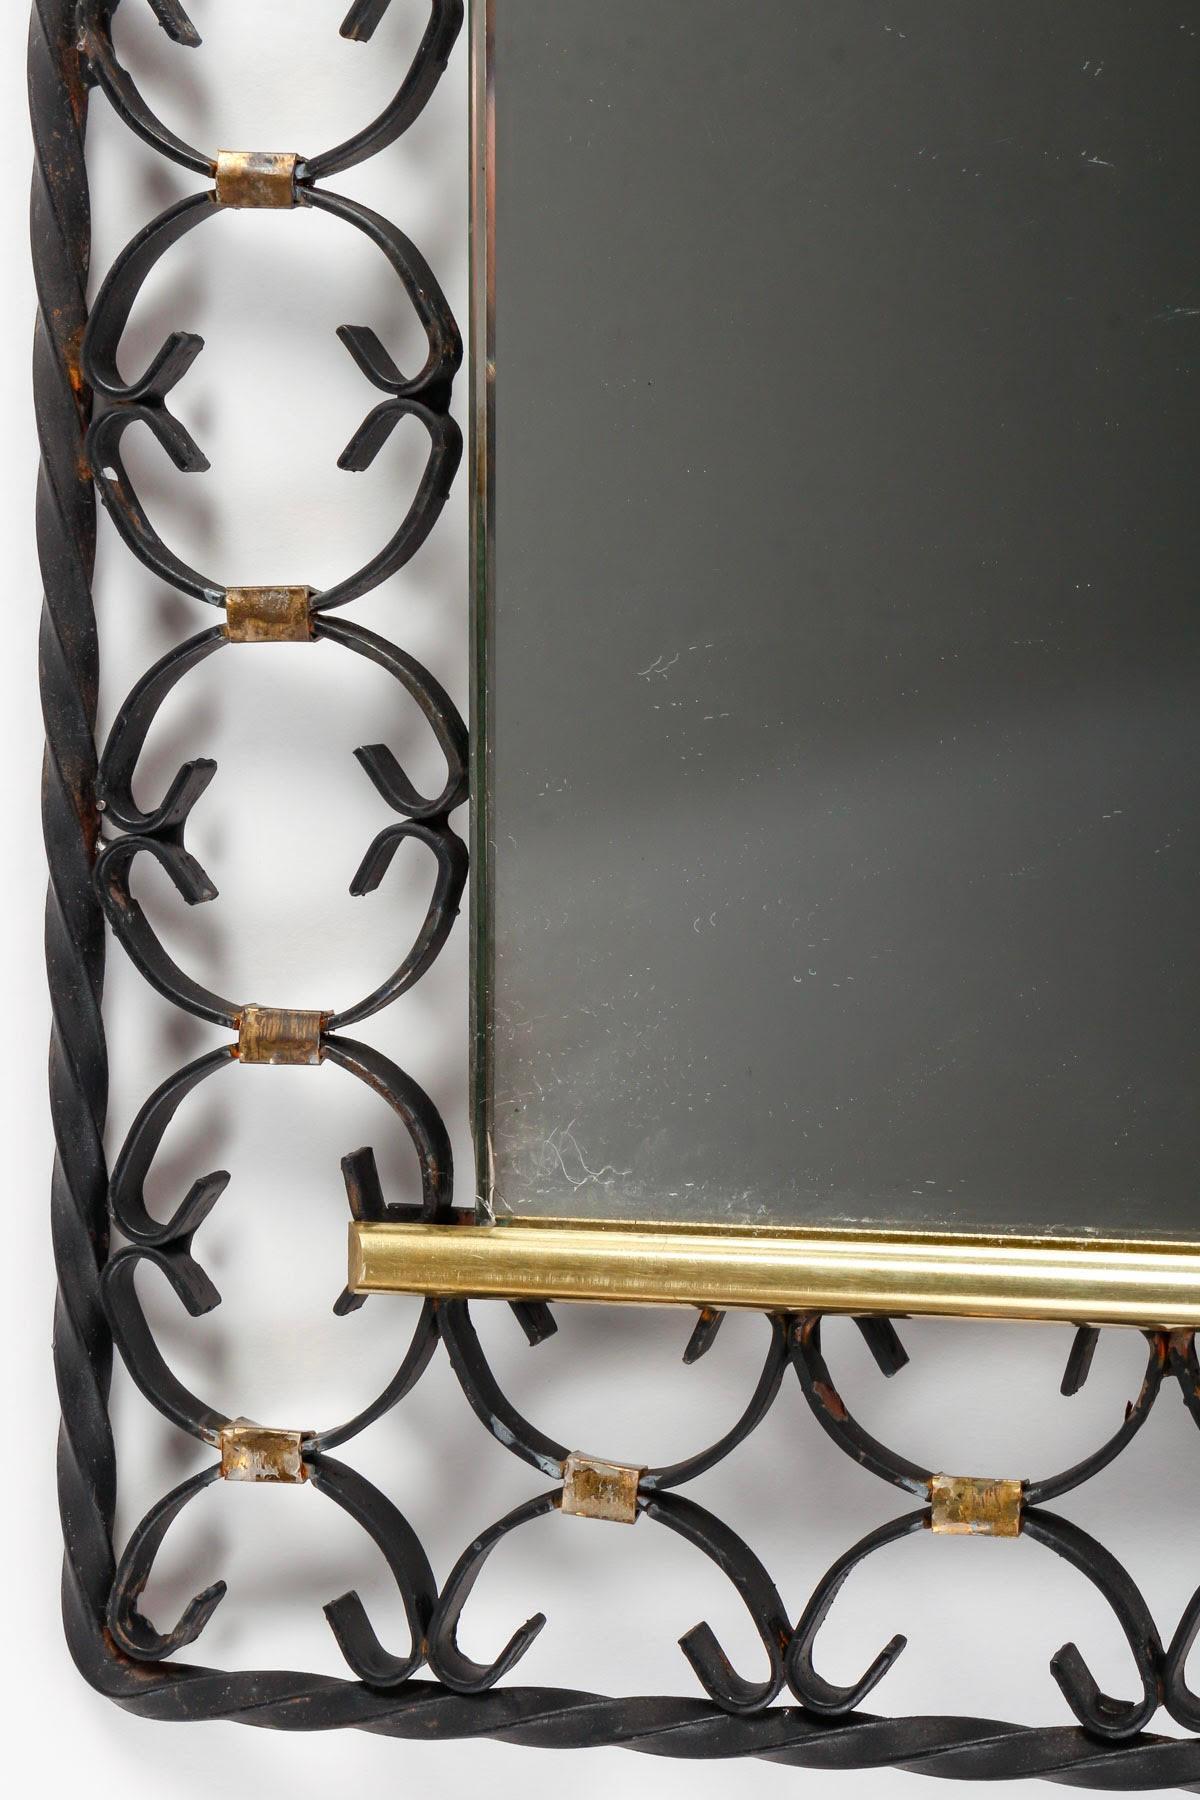 Wrought iron and brass mirror, 1950s-1960s design.

Mirror from the 1950s-1960s in painted wrought iron and brass, mid XXth century design.

Dimensions: h: 39cm, w: 34cm, d: 1cm